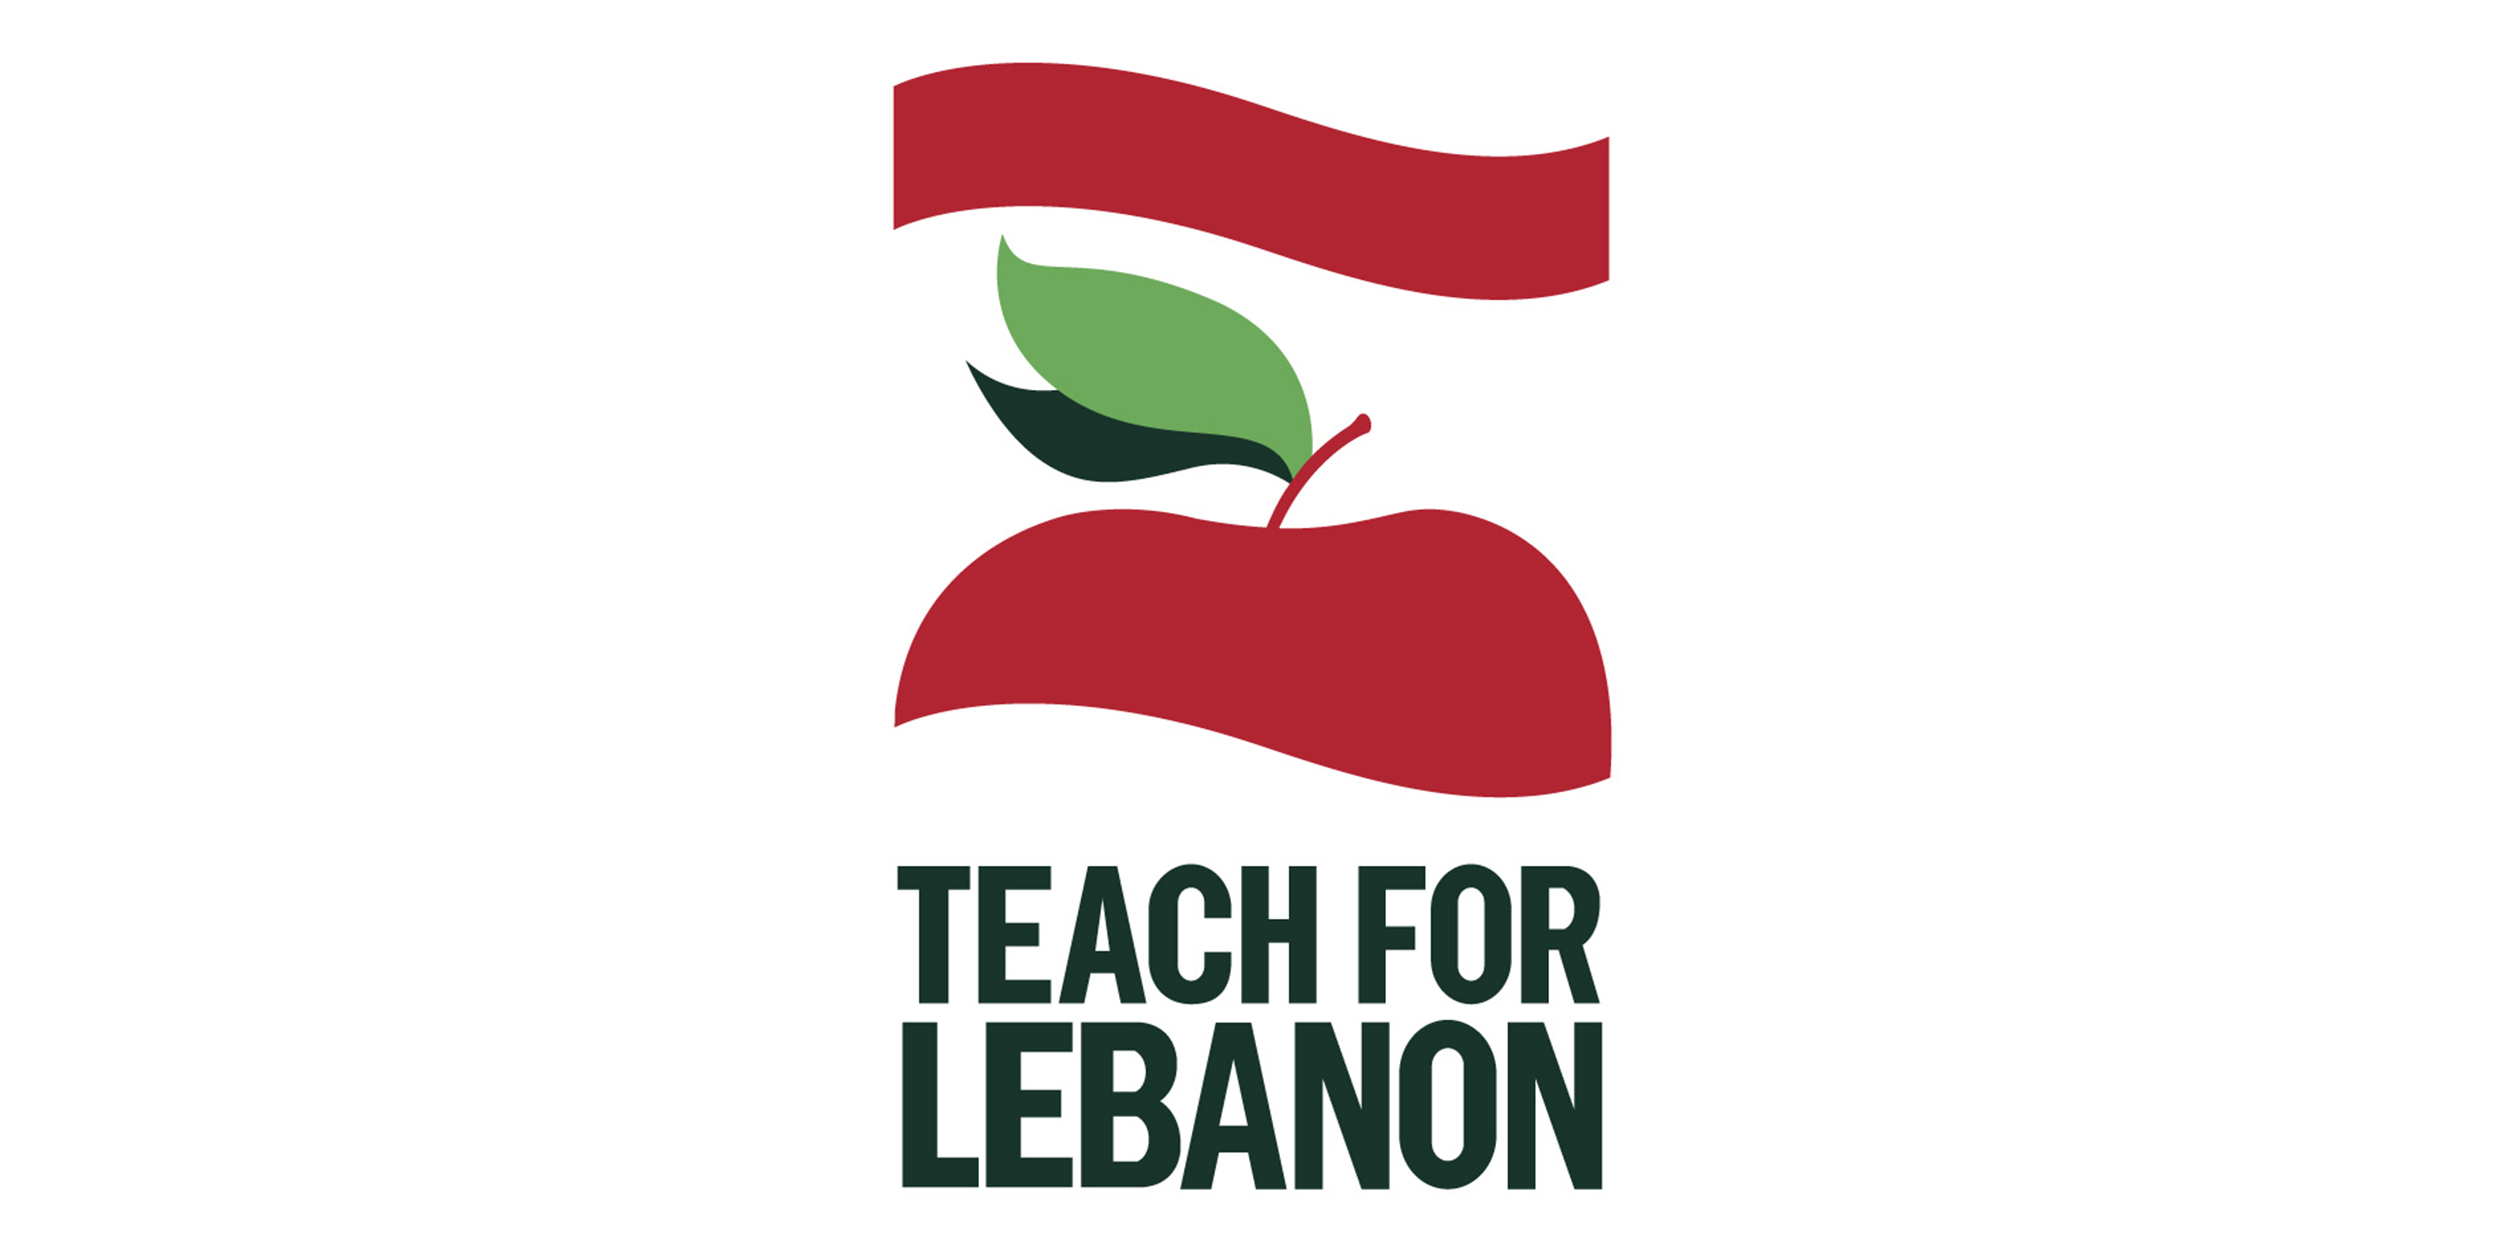 Cash Out | Teach for Lebanon